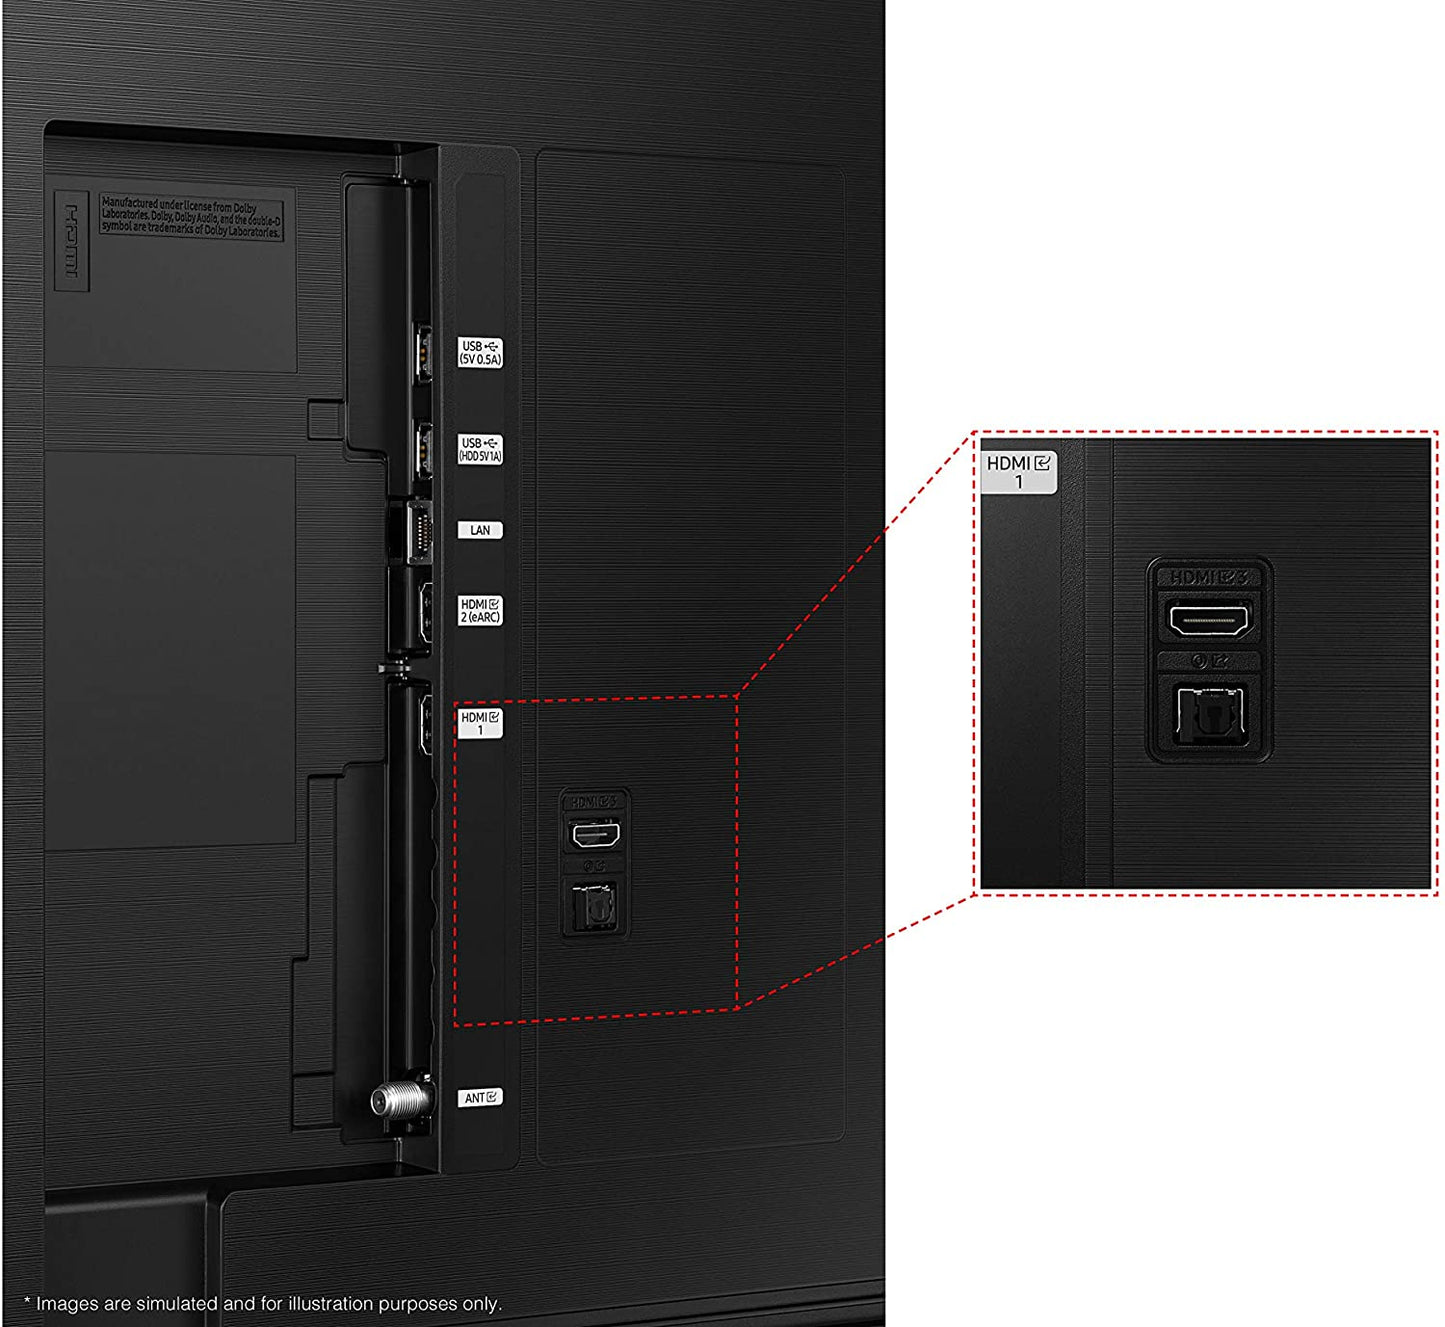 SAMSUNG 32-in QLED Q60A - 4K UHD Dual LED Quantum HDR Smart TV QN32Q60AAFXZA (2021)